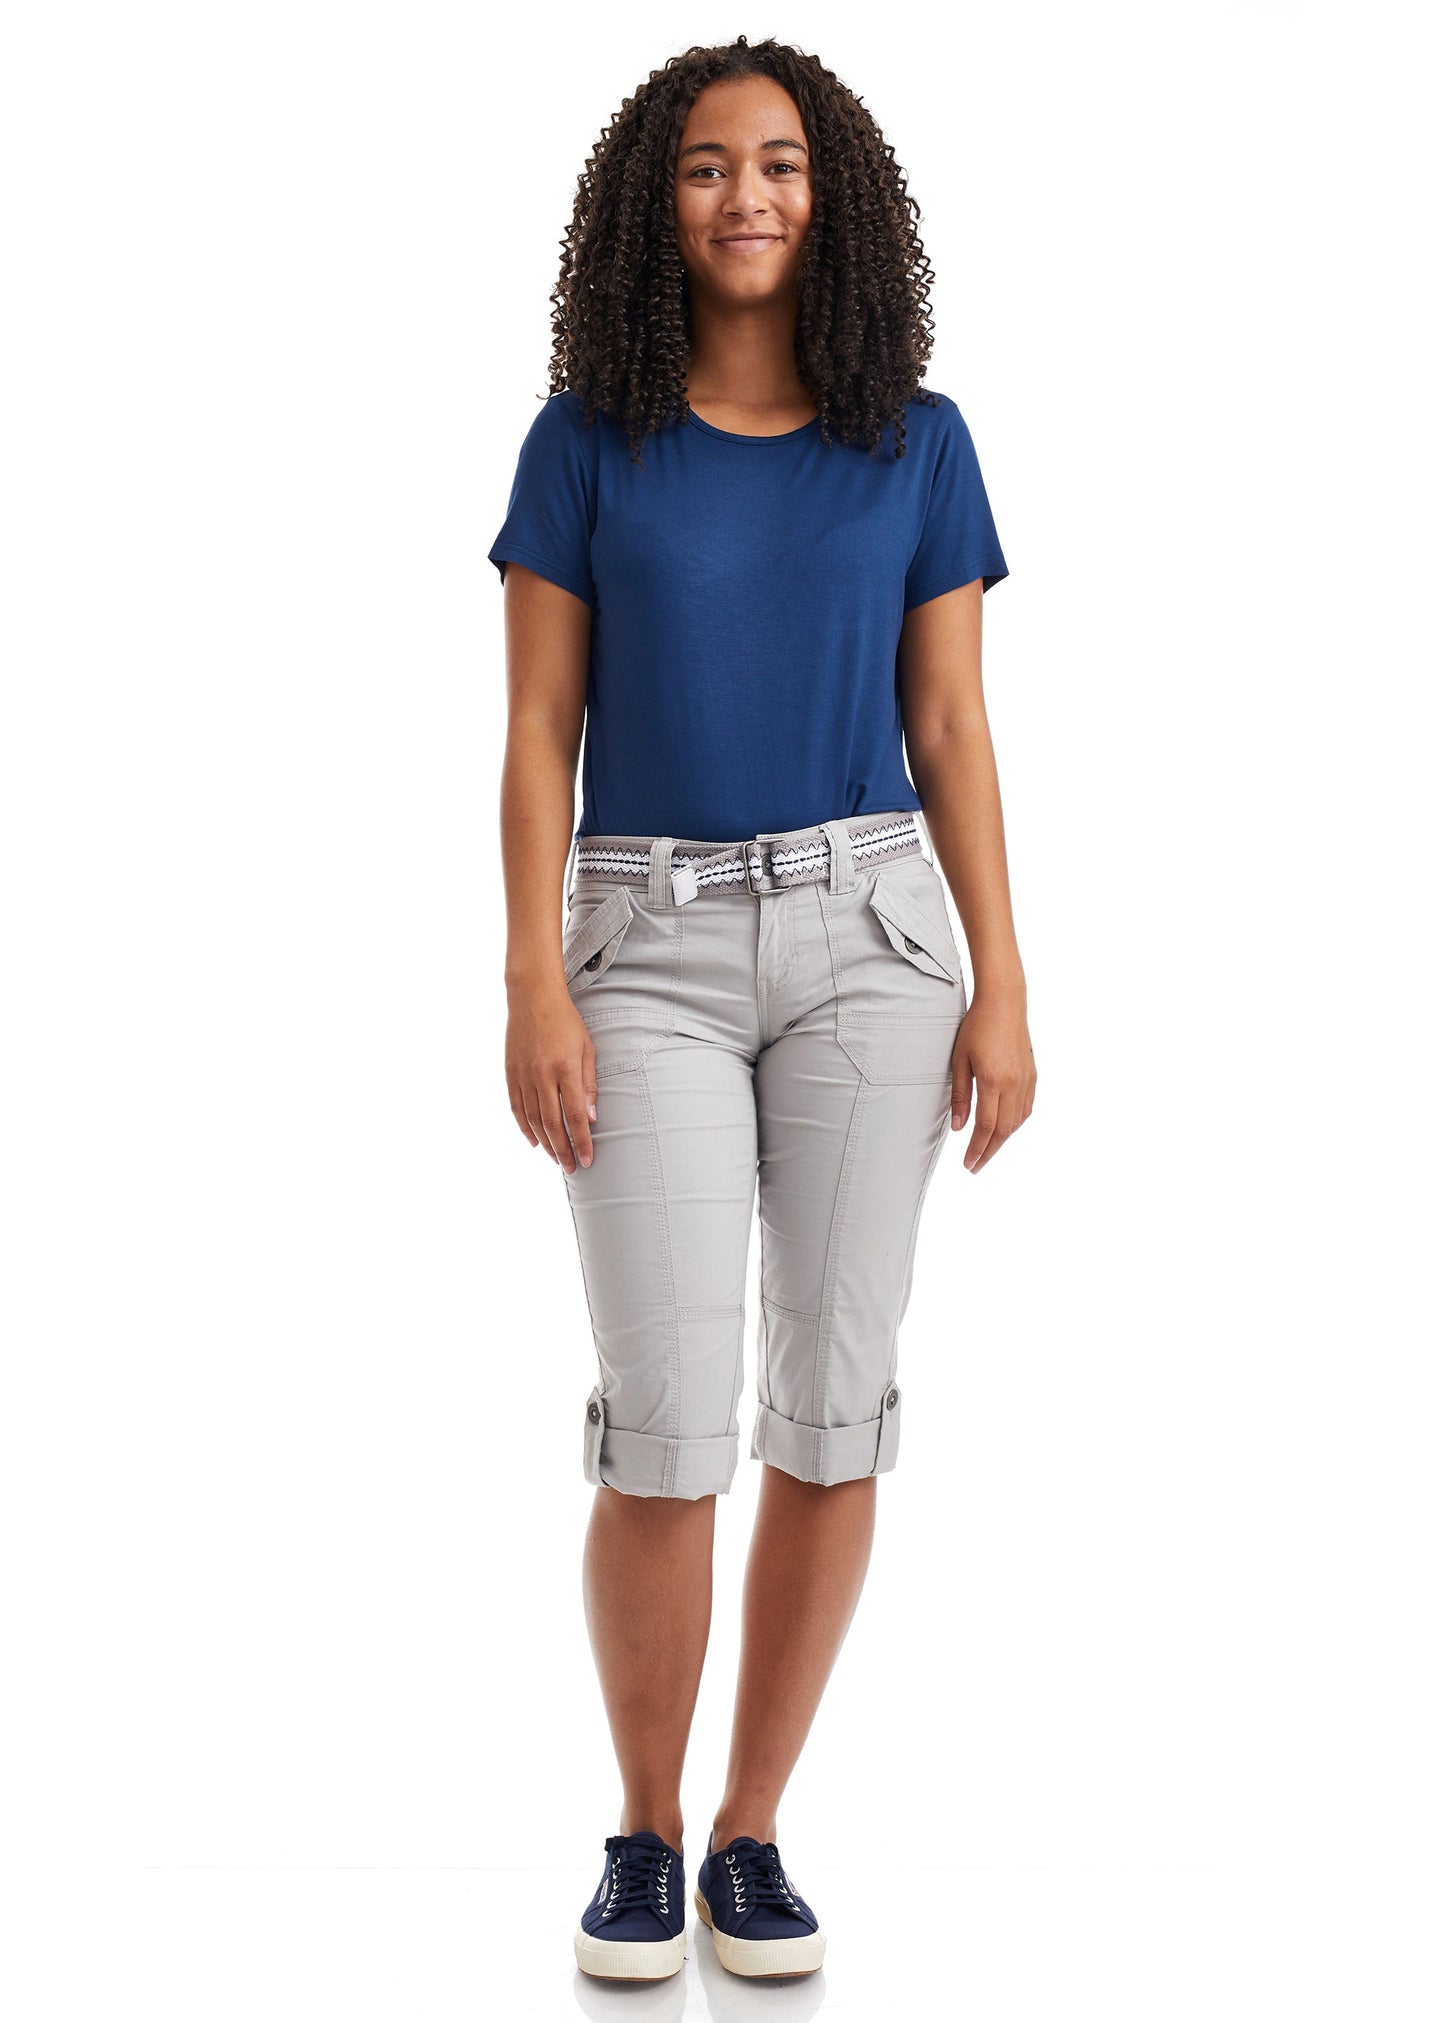 Suko Jeans, Pants & Jumpsuits, Euc Suko Jeans Cropped Capri Pants Black  Polka Dot Size Stretchy Comfy